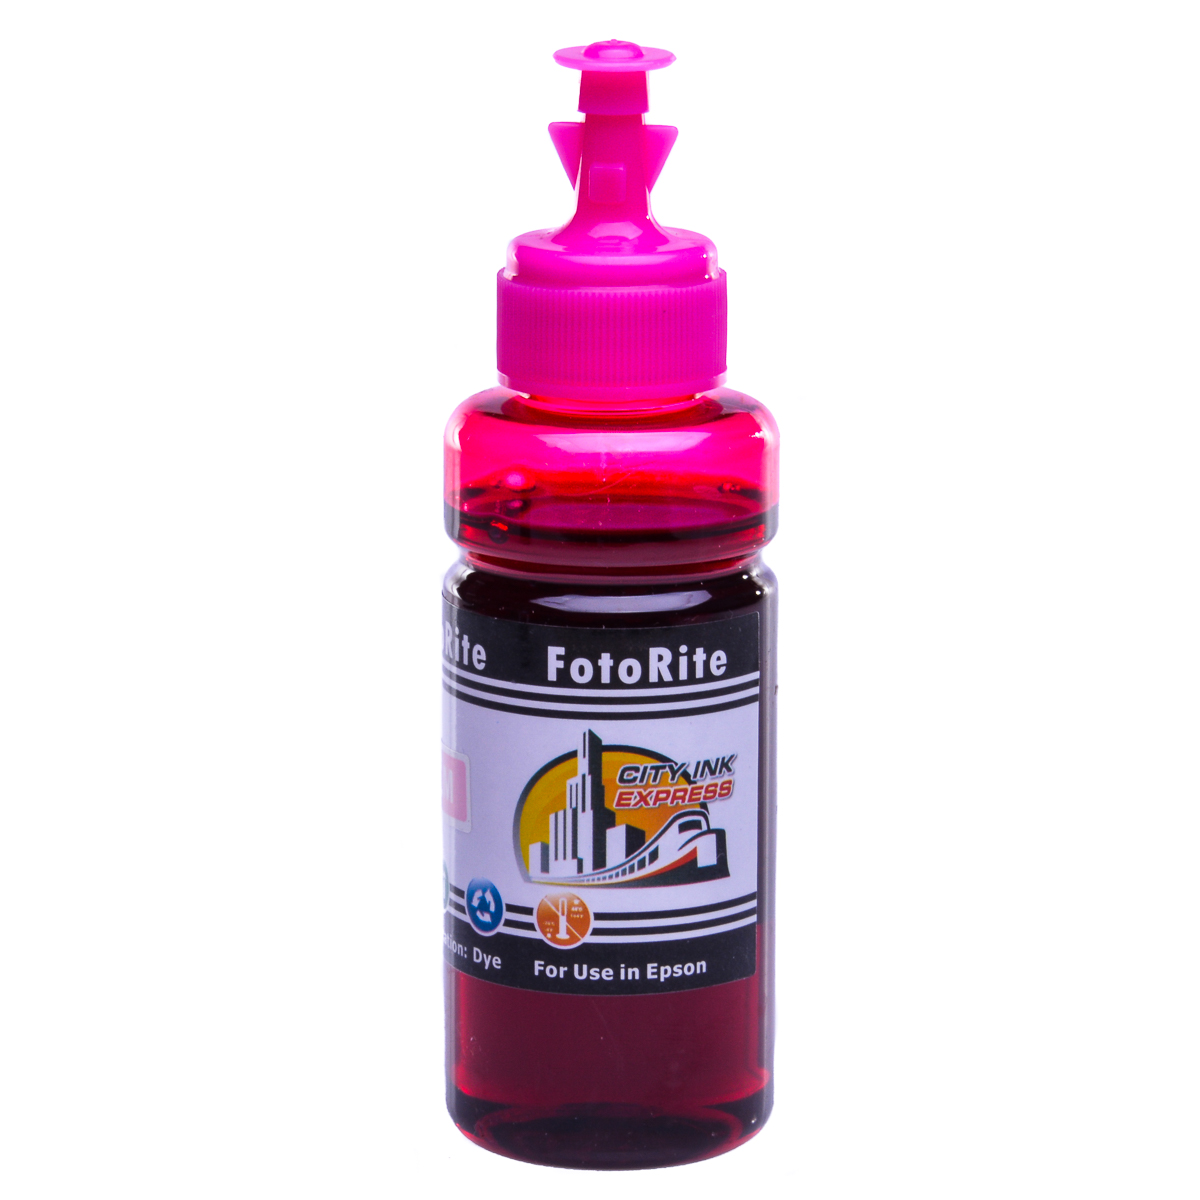 Cheap Light Magenta dye ink replaces Epson Stylus 1500W - T0796 - CT079640